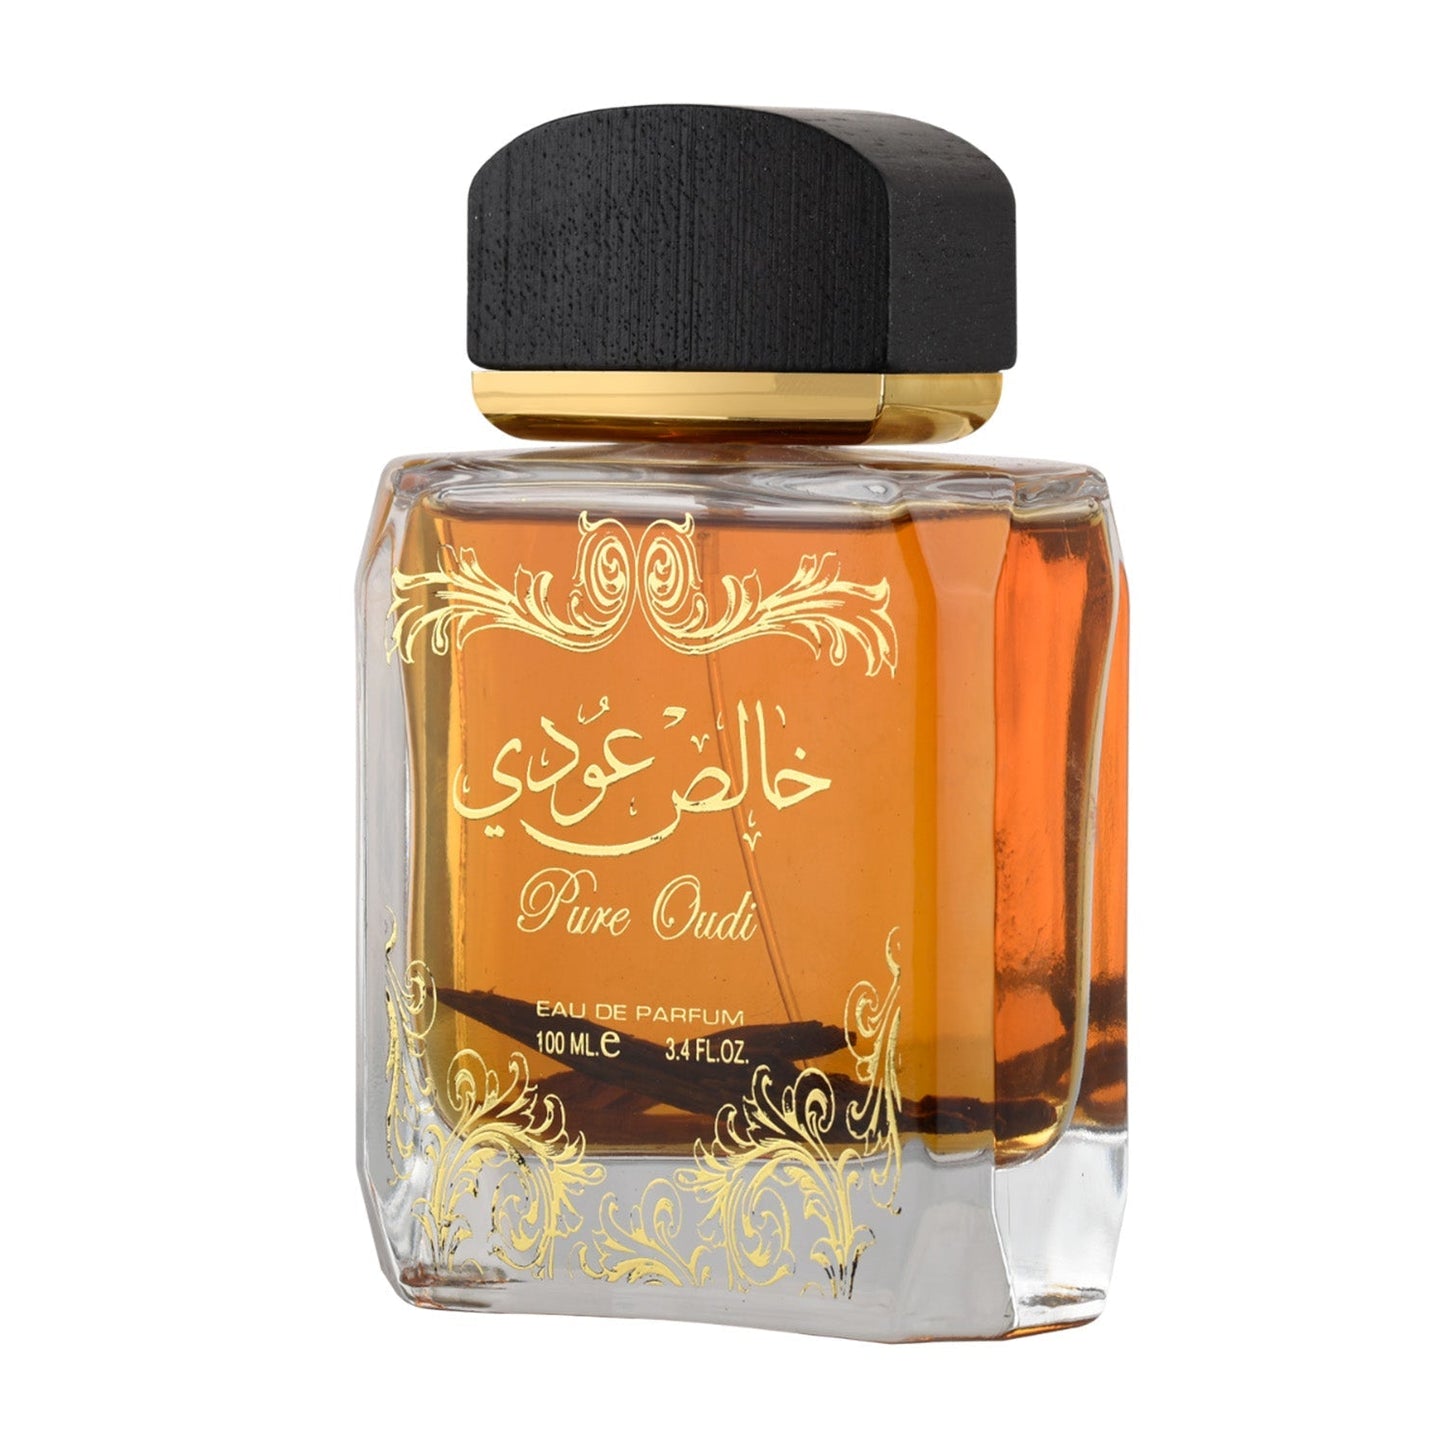 Khalis Oudi (Pure Oudi) Eau De Parfum 100ml Lattafa-Perfume Heaven